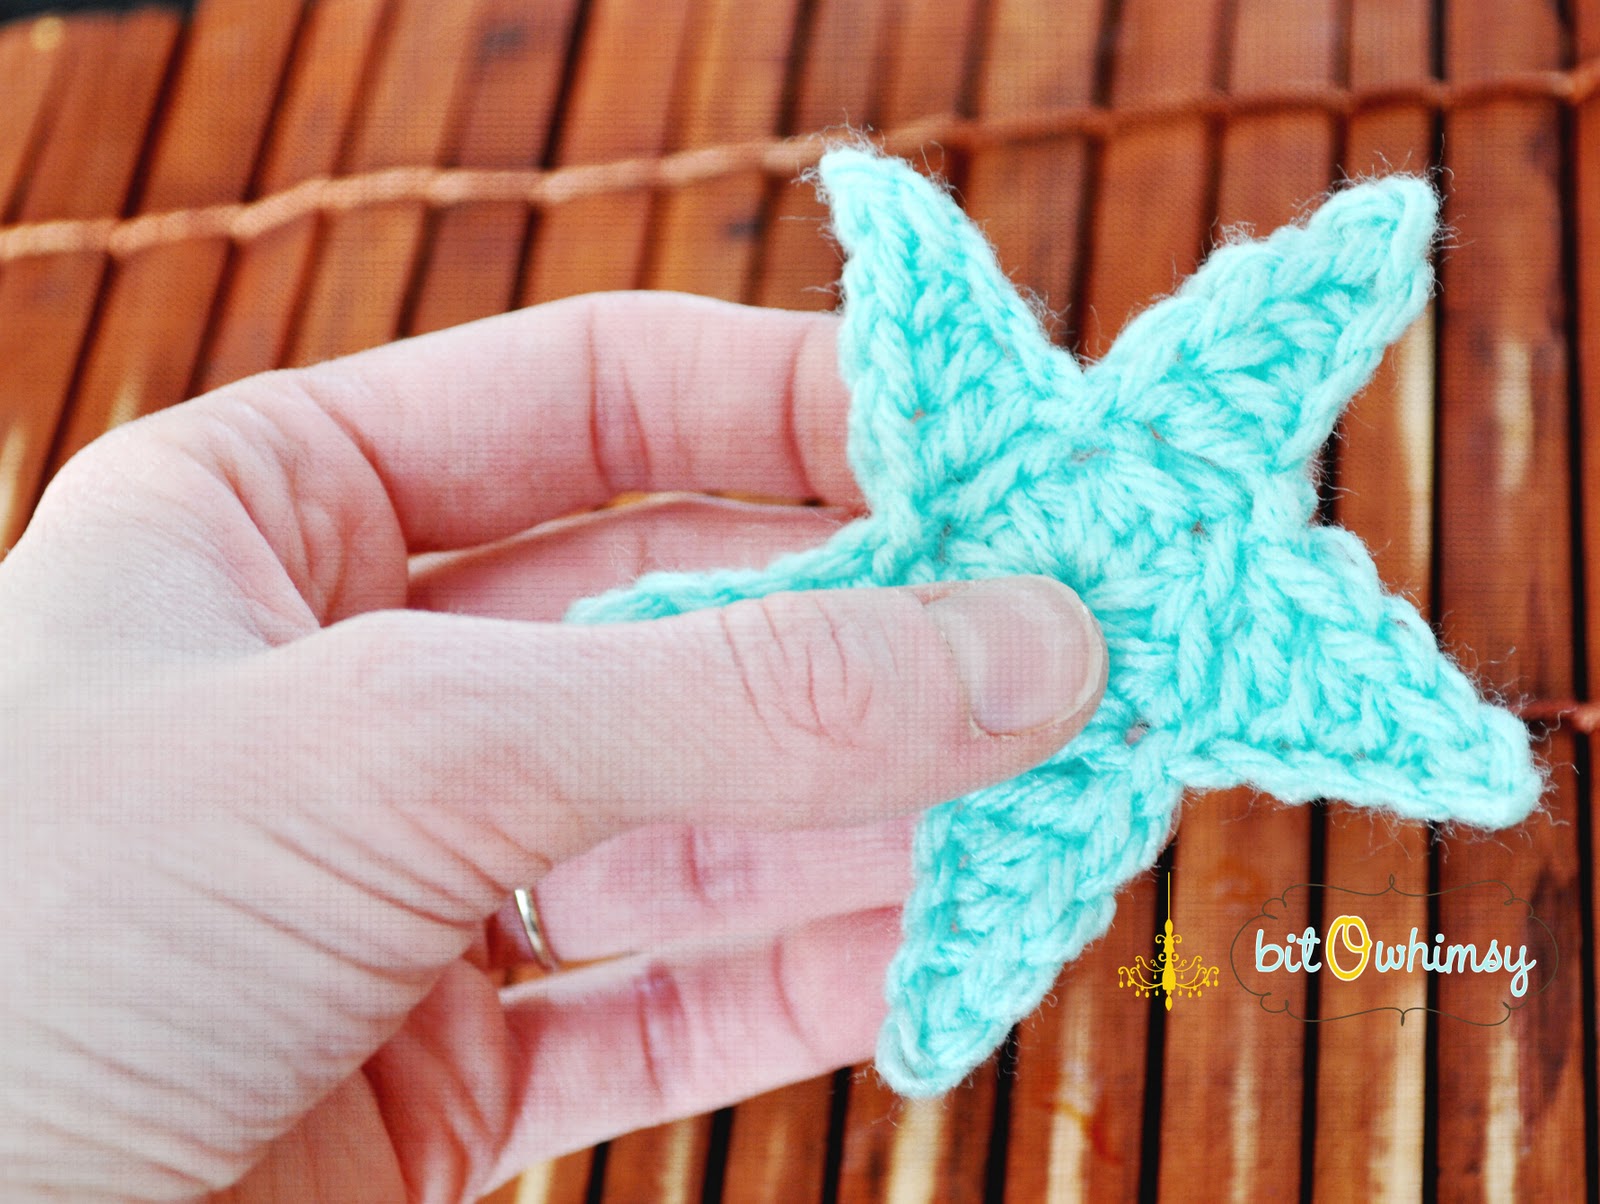 How to Crochet: Star Stitch - Croche
t Spot - Crochet Patterns